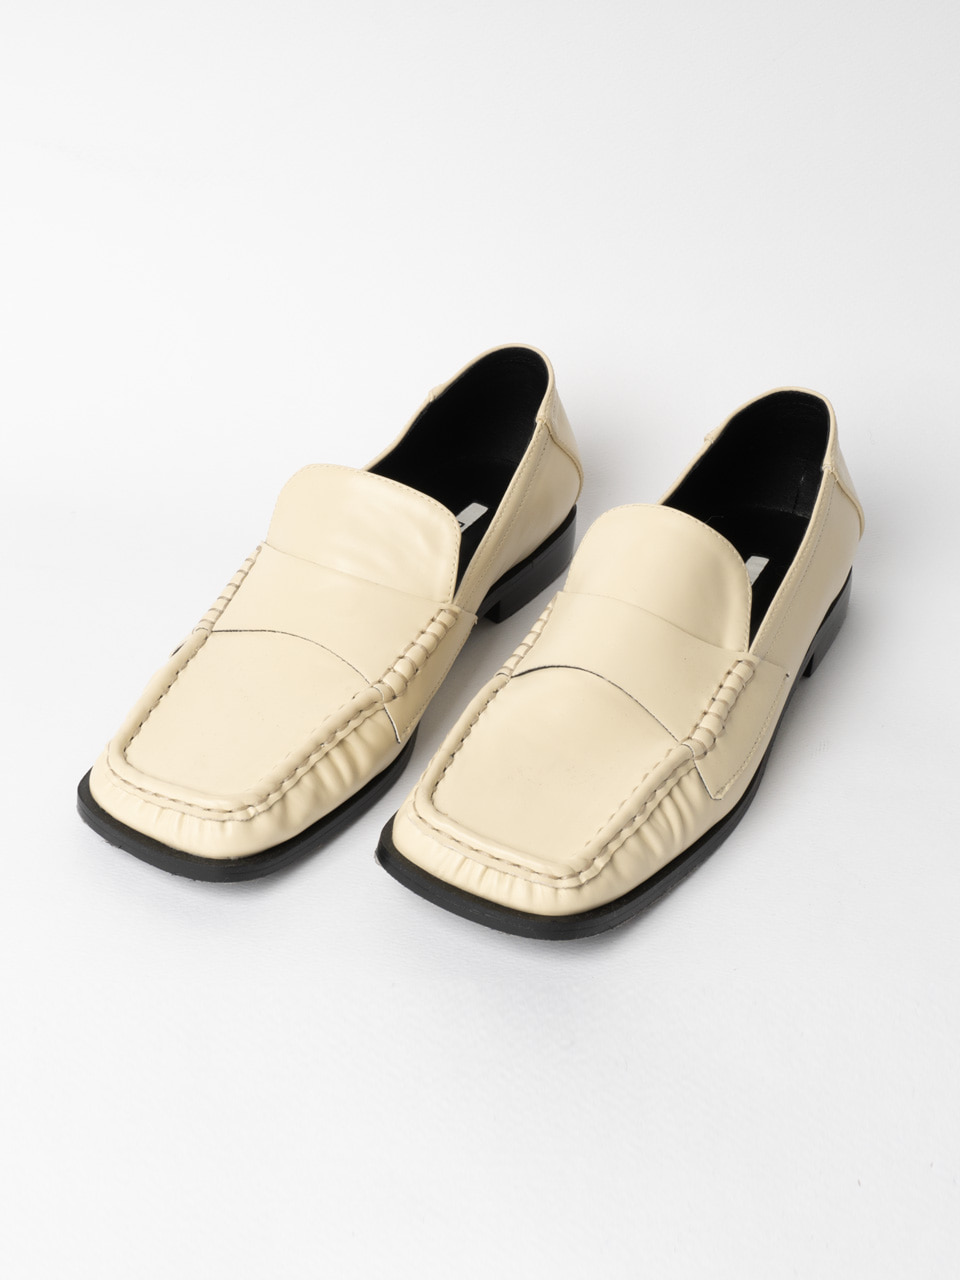 URAGO Square classic loafer